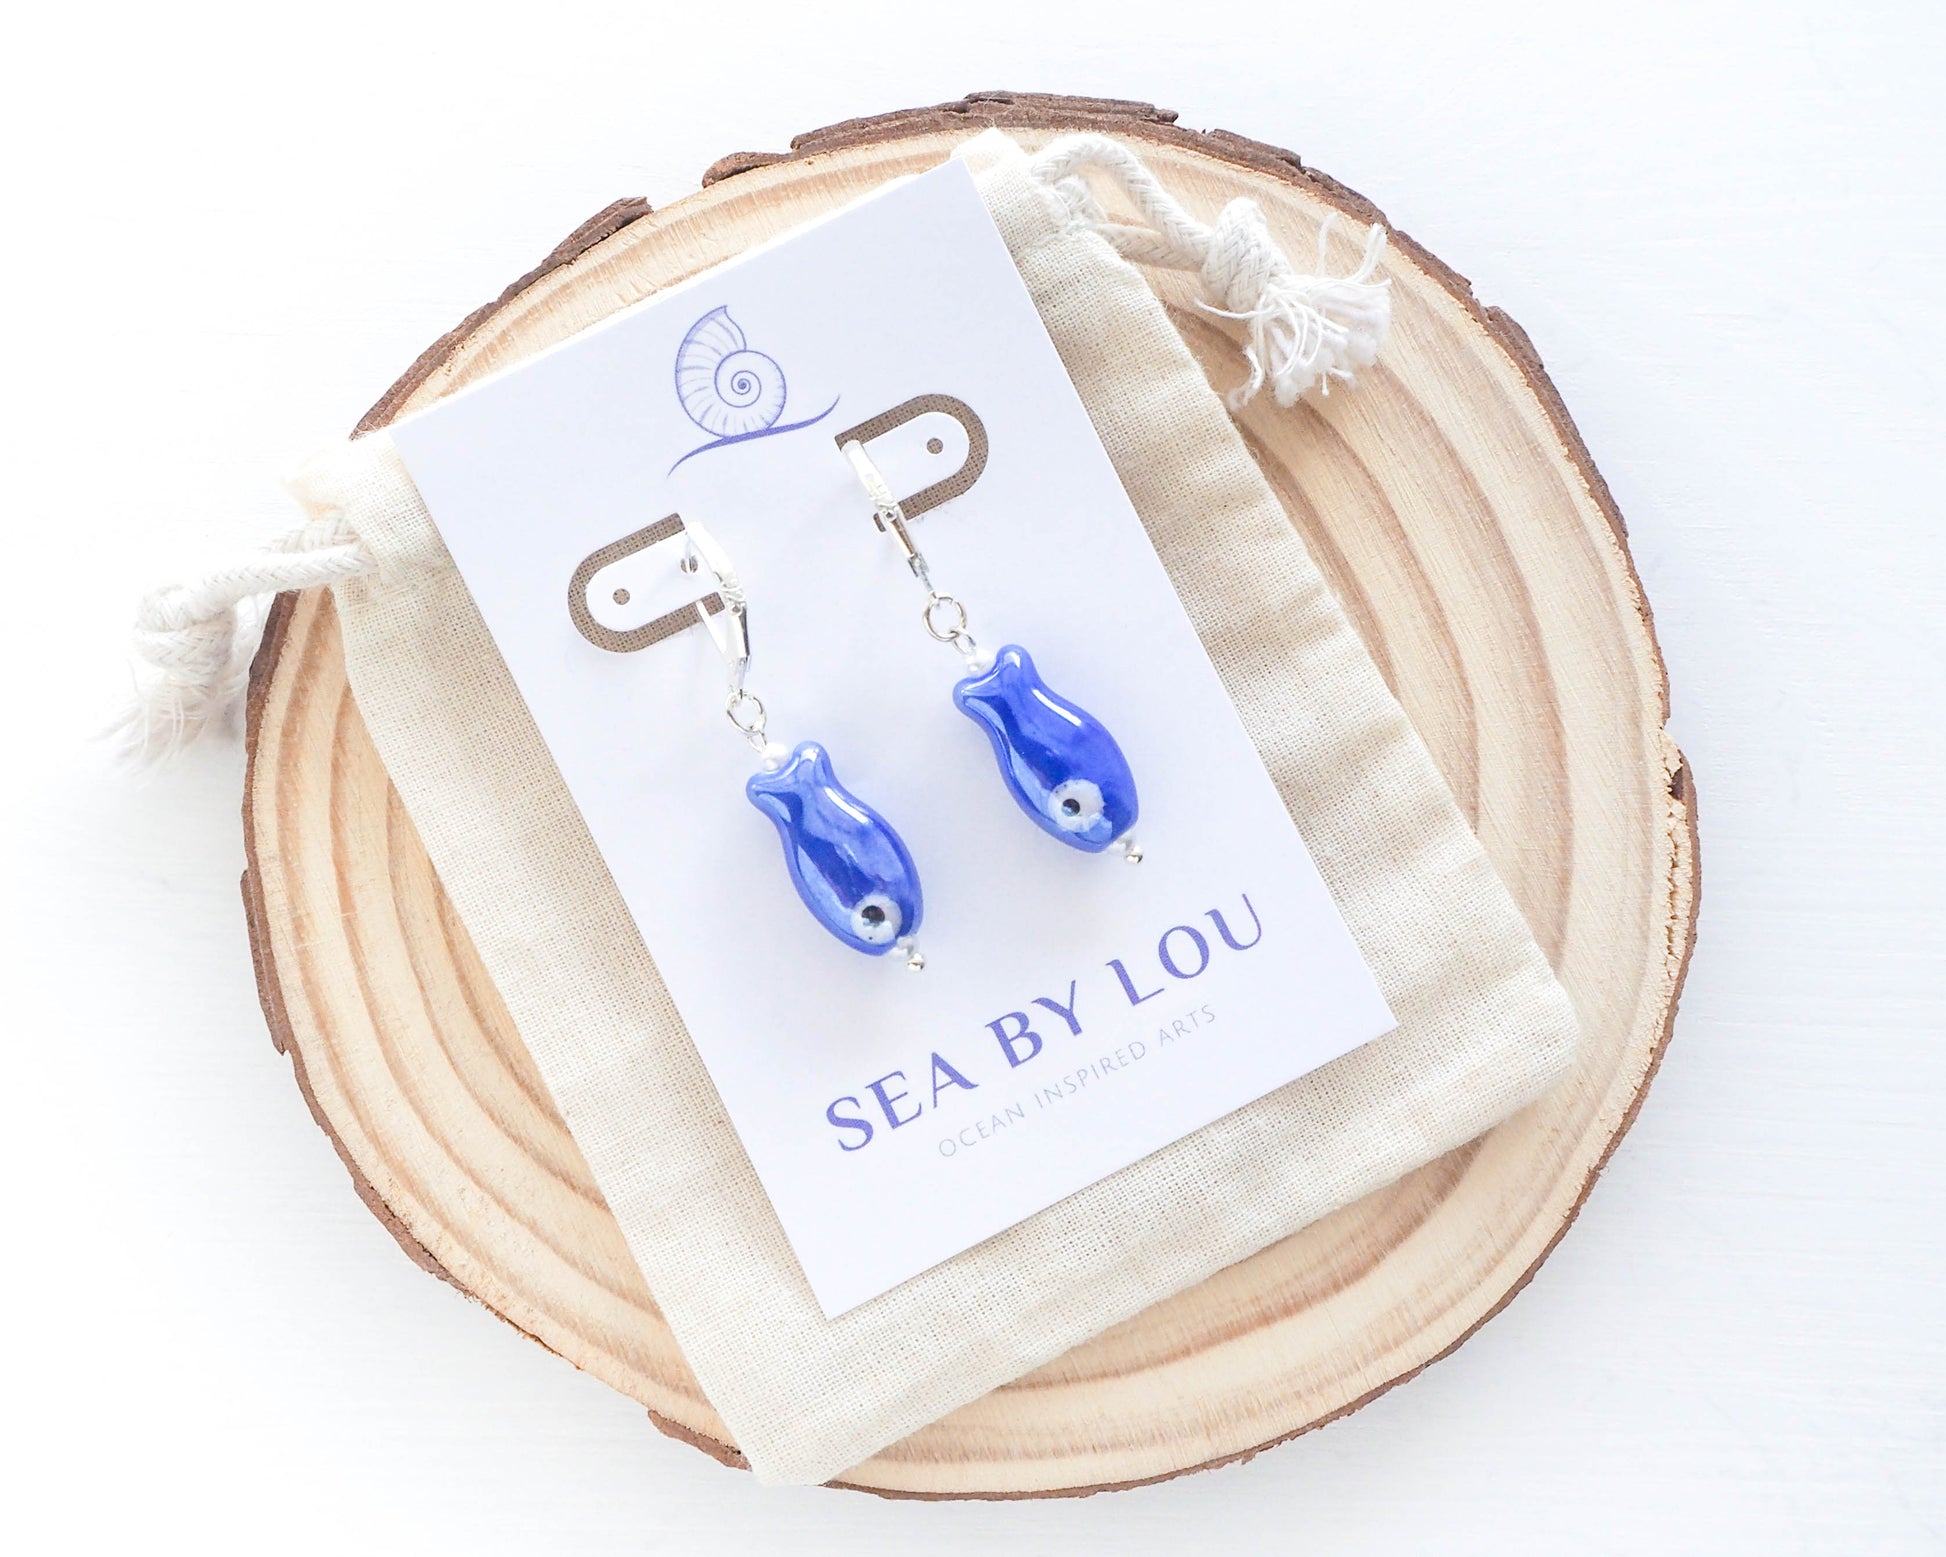 Portuguese Sardine Ceramic Earrings, Blue Ceramic Sardine Earrings, Elegant Sardine-shaped Earrings, Portugal-inspired Ceramic Sardine Jewelry